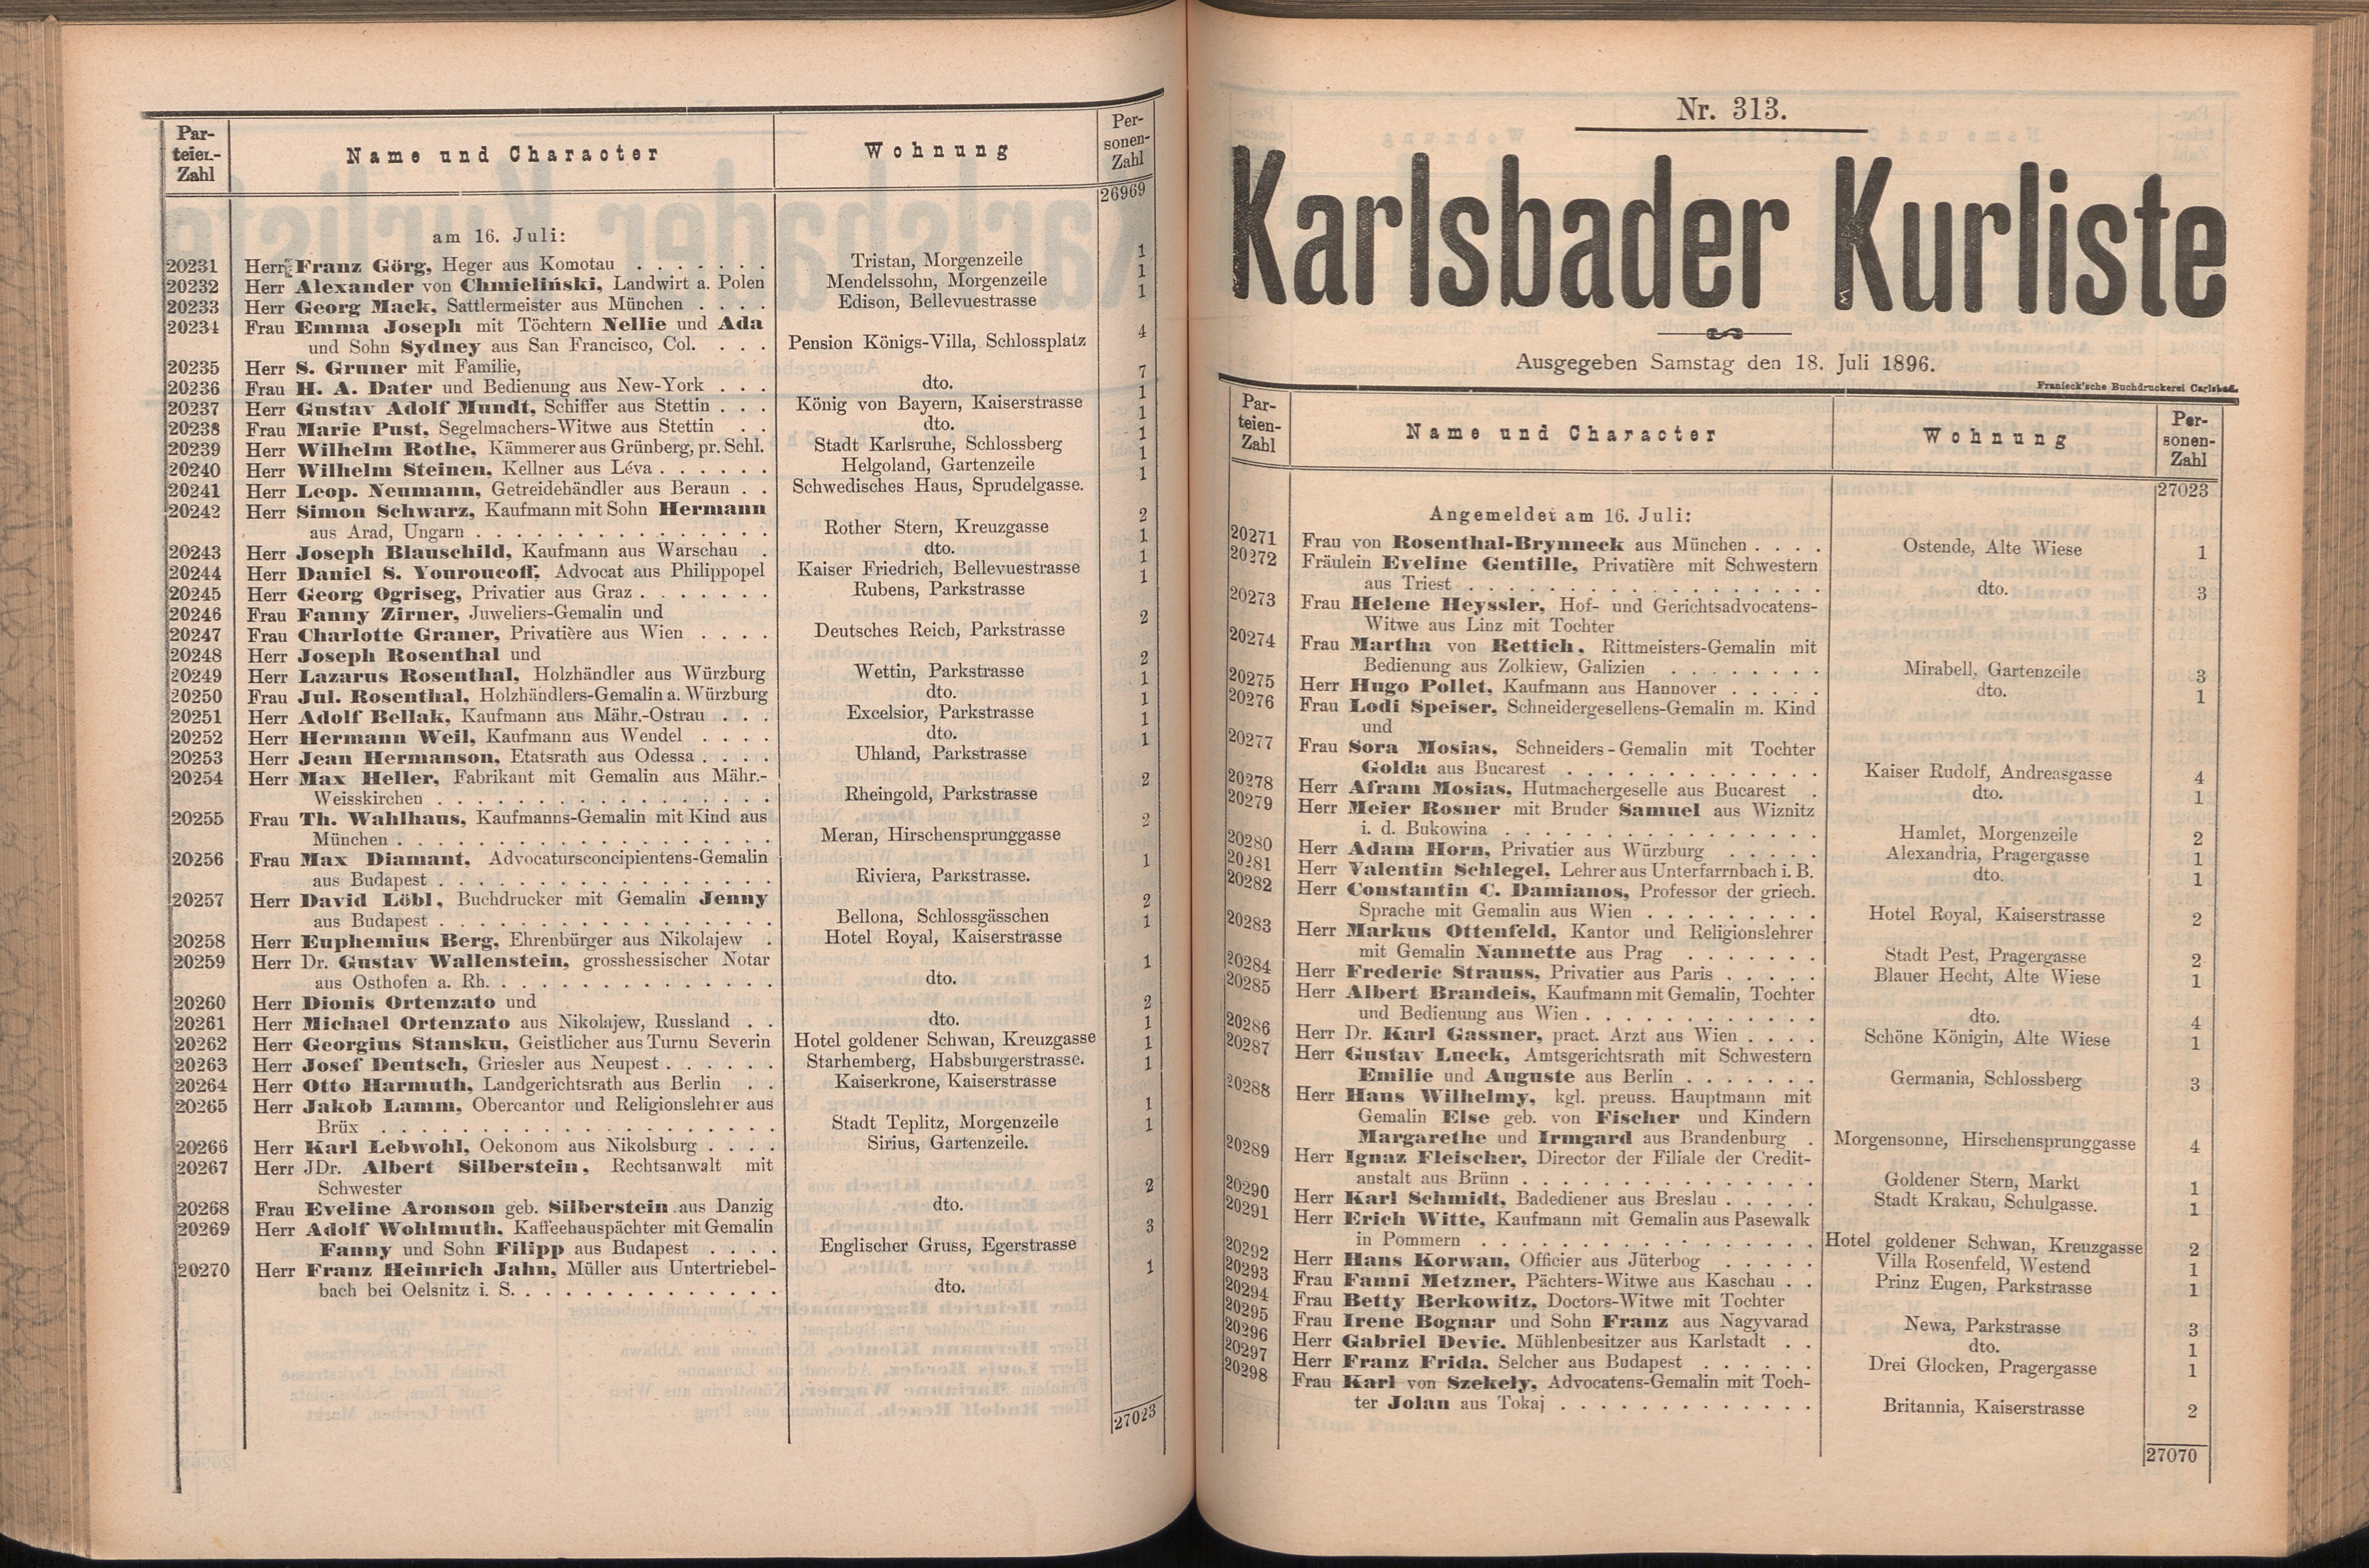 385. soap-kv_knihovna_karlsbader-kurliste-1896_3860